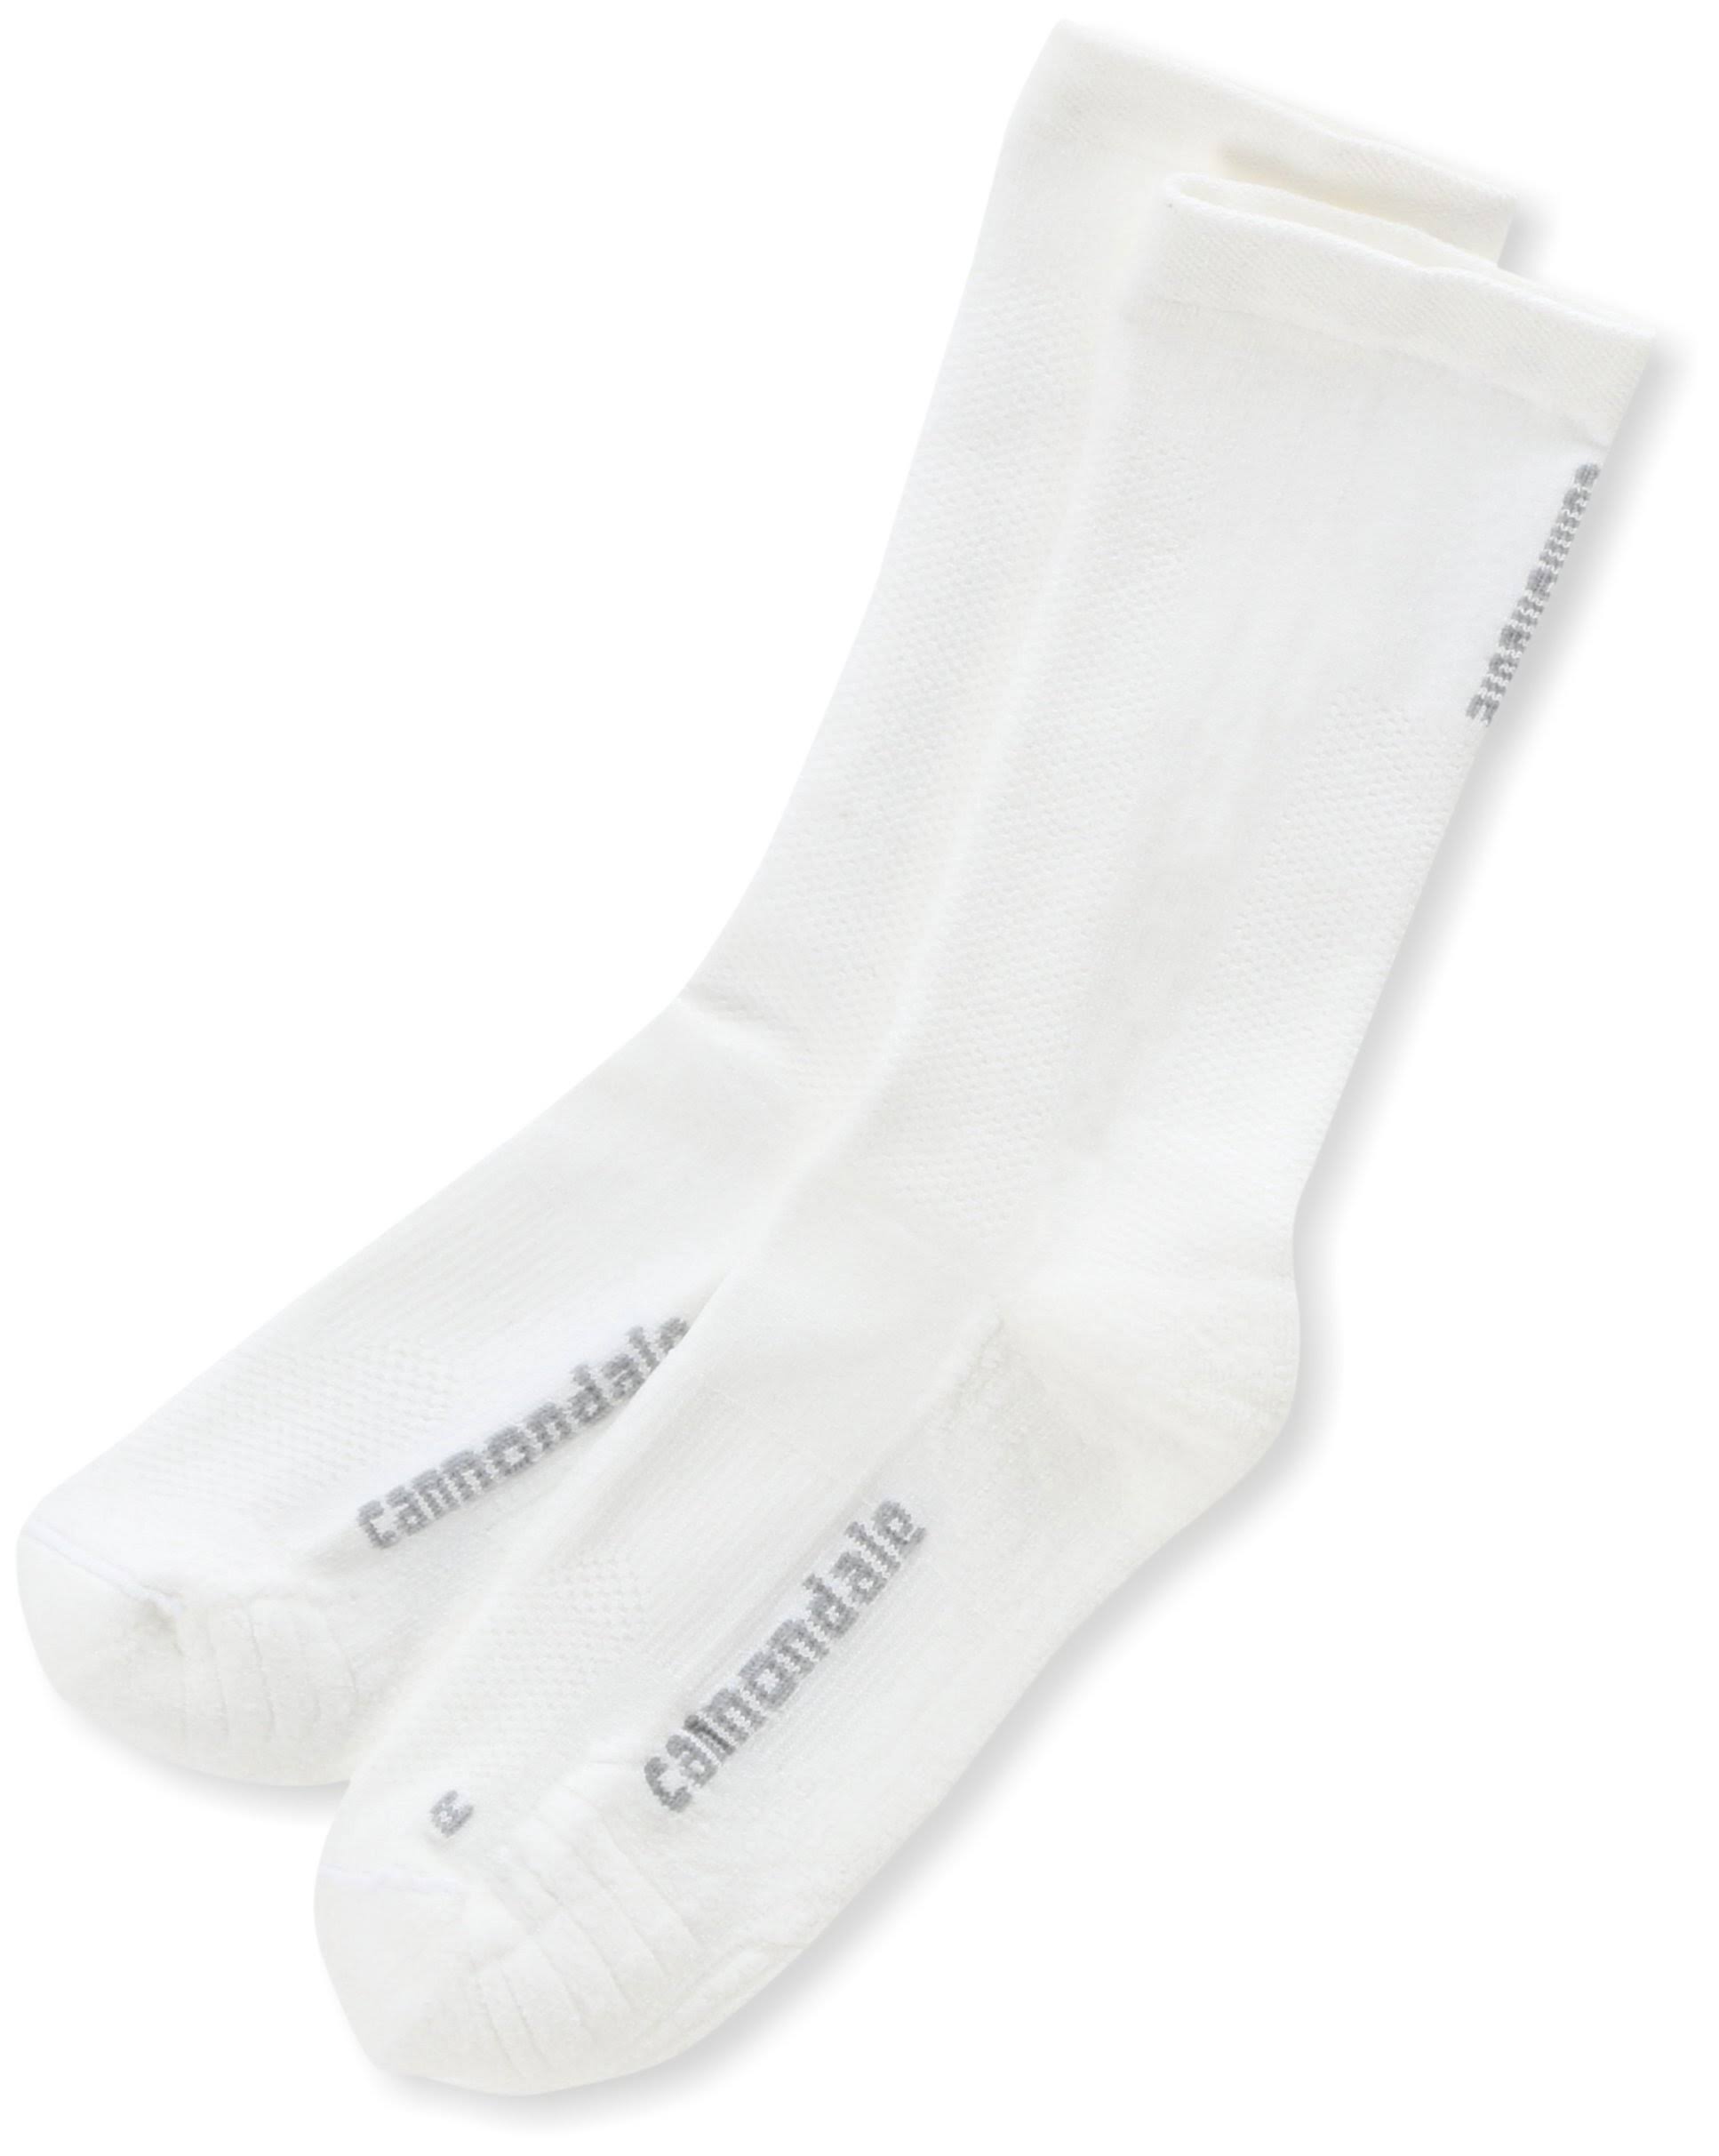 Cannondale Men's High Socks, White, X-Large